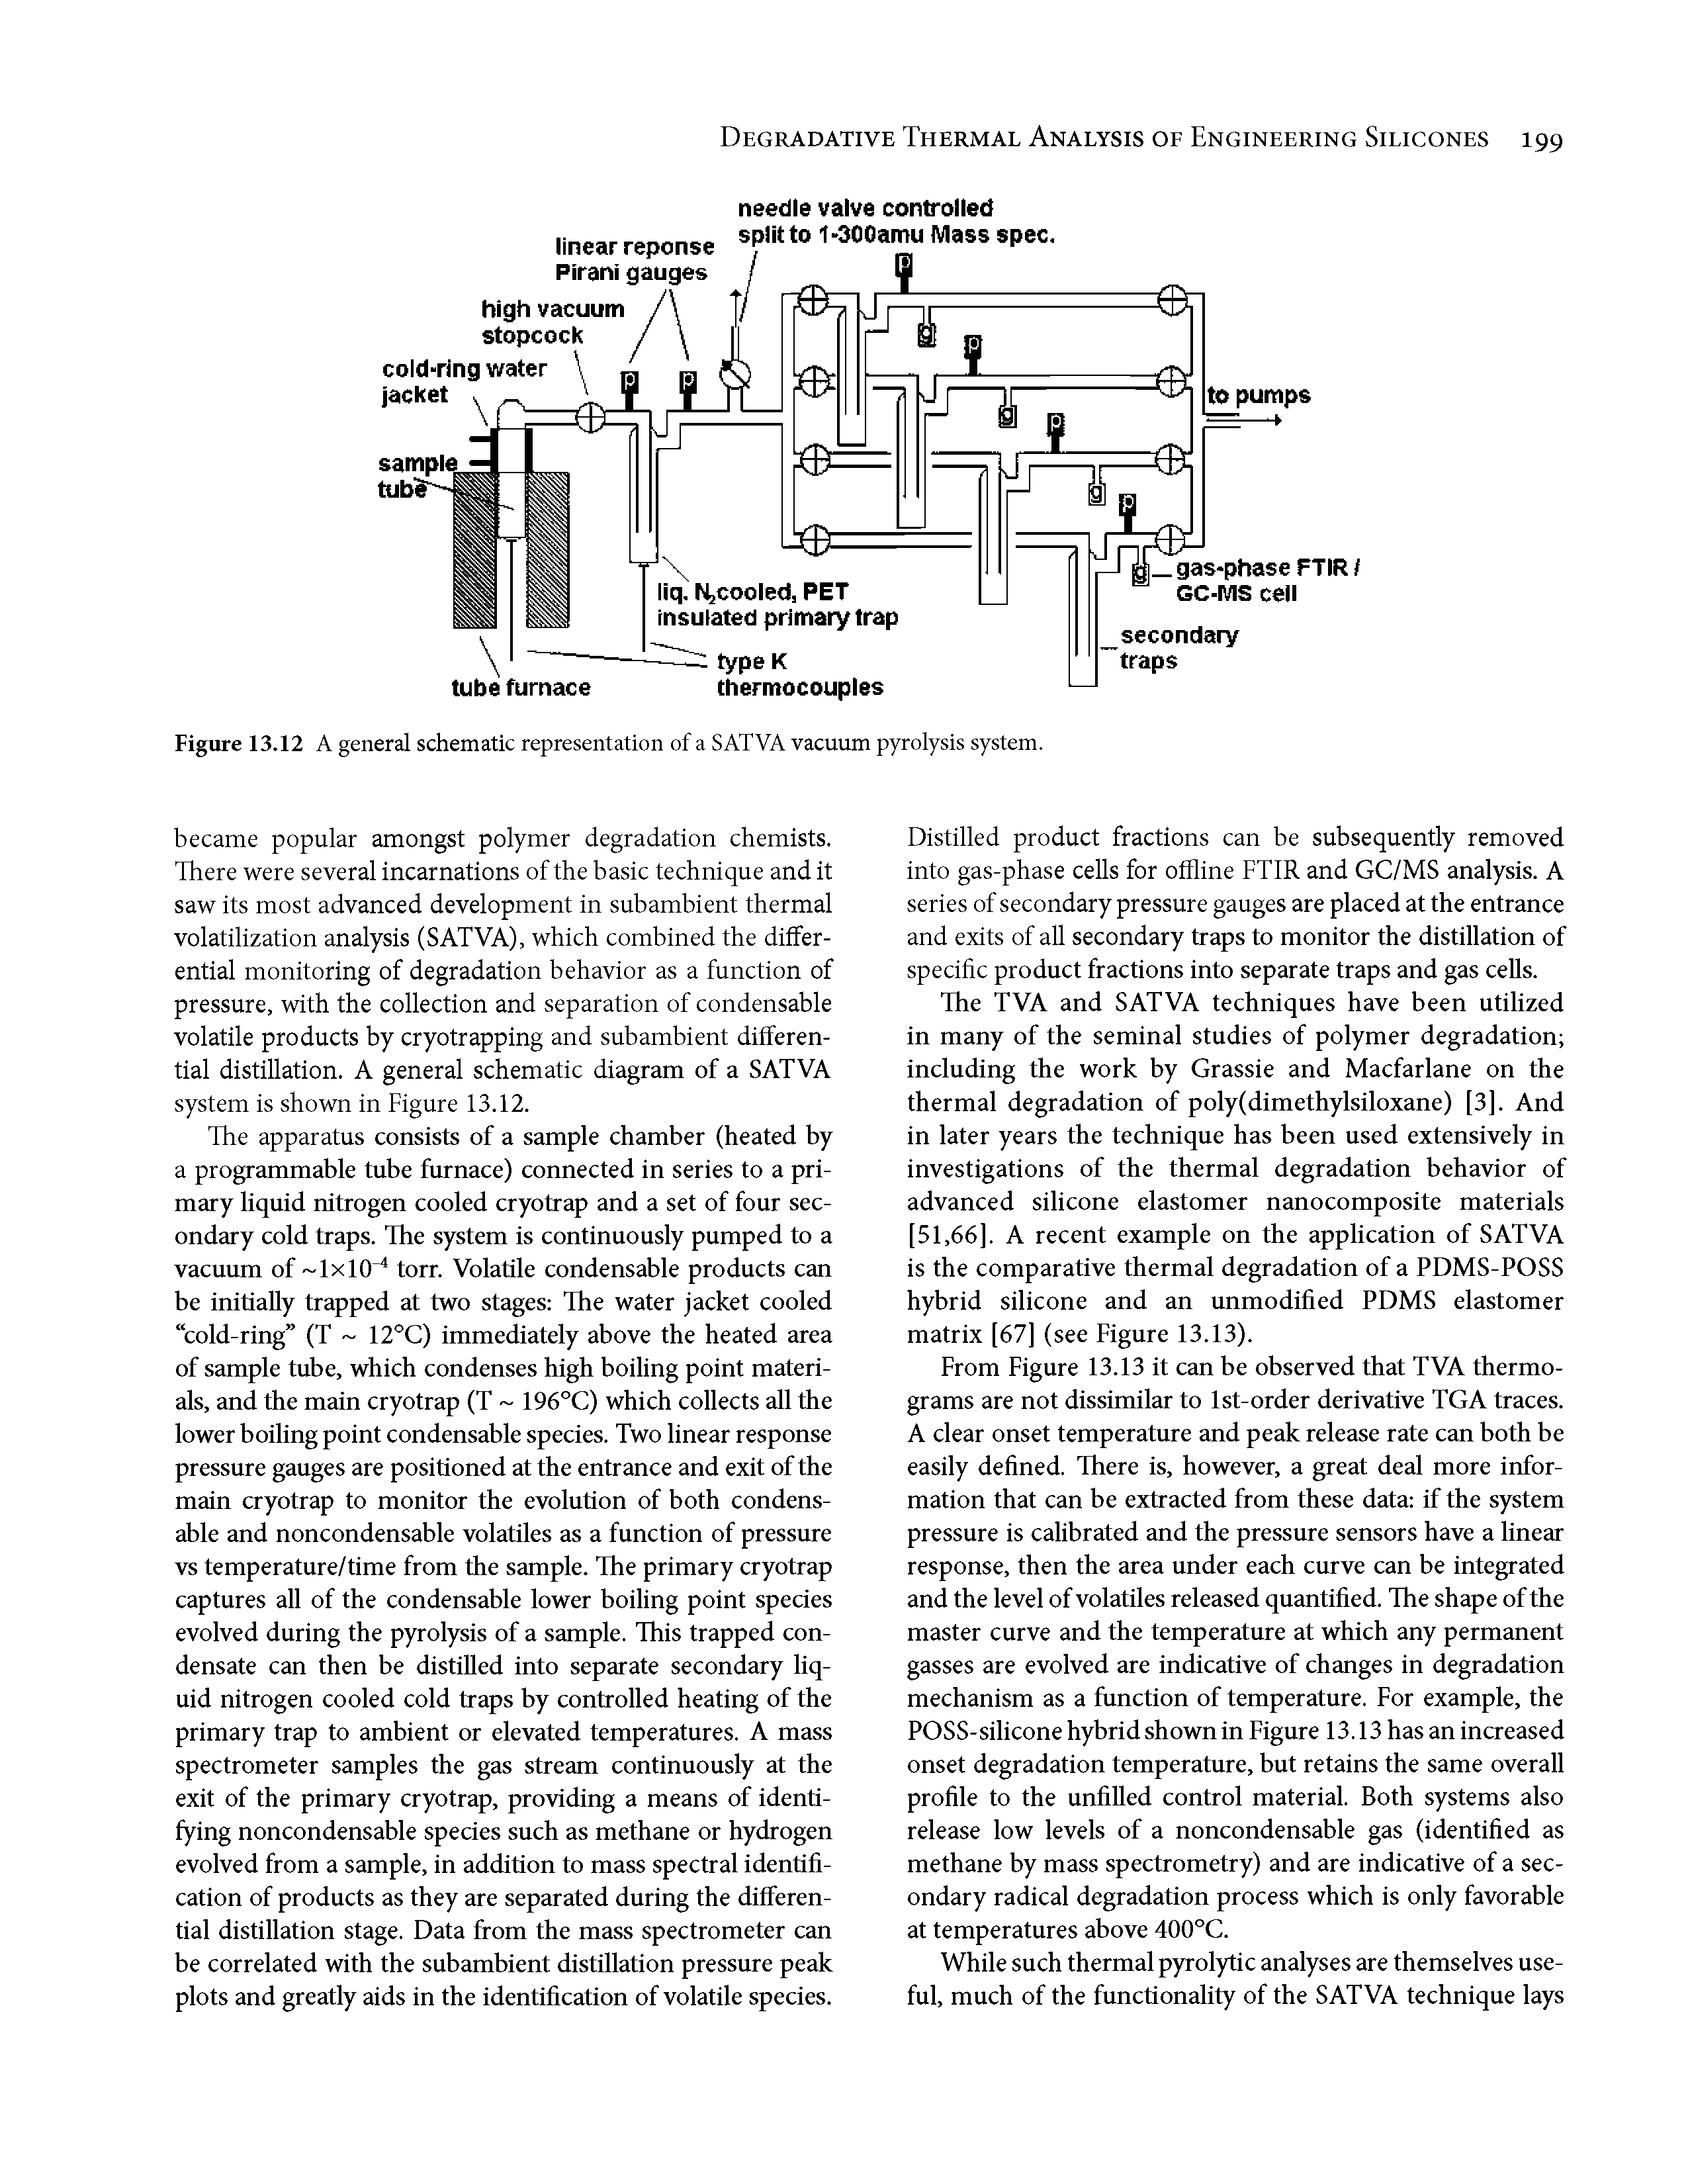 Figure 13.12 A general schematic representation of a SATVA vacuum pyrolysis system.